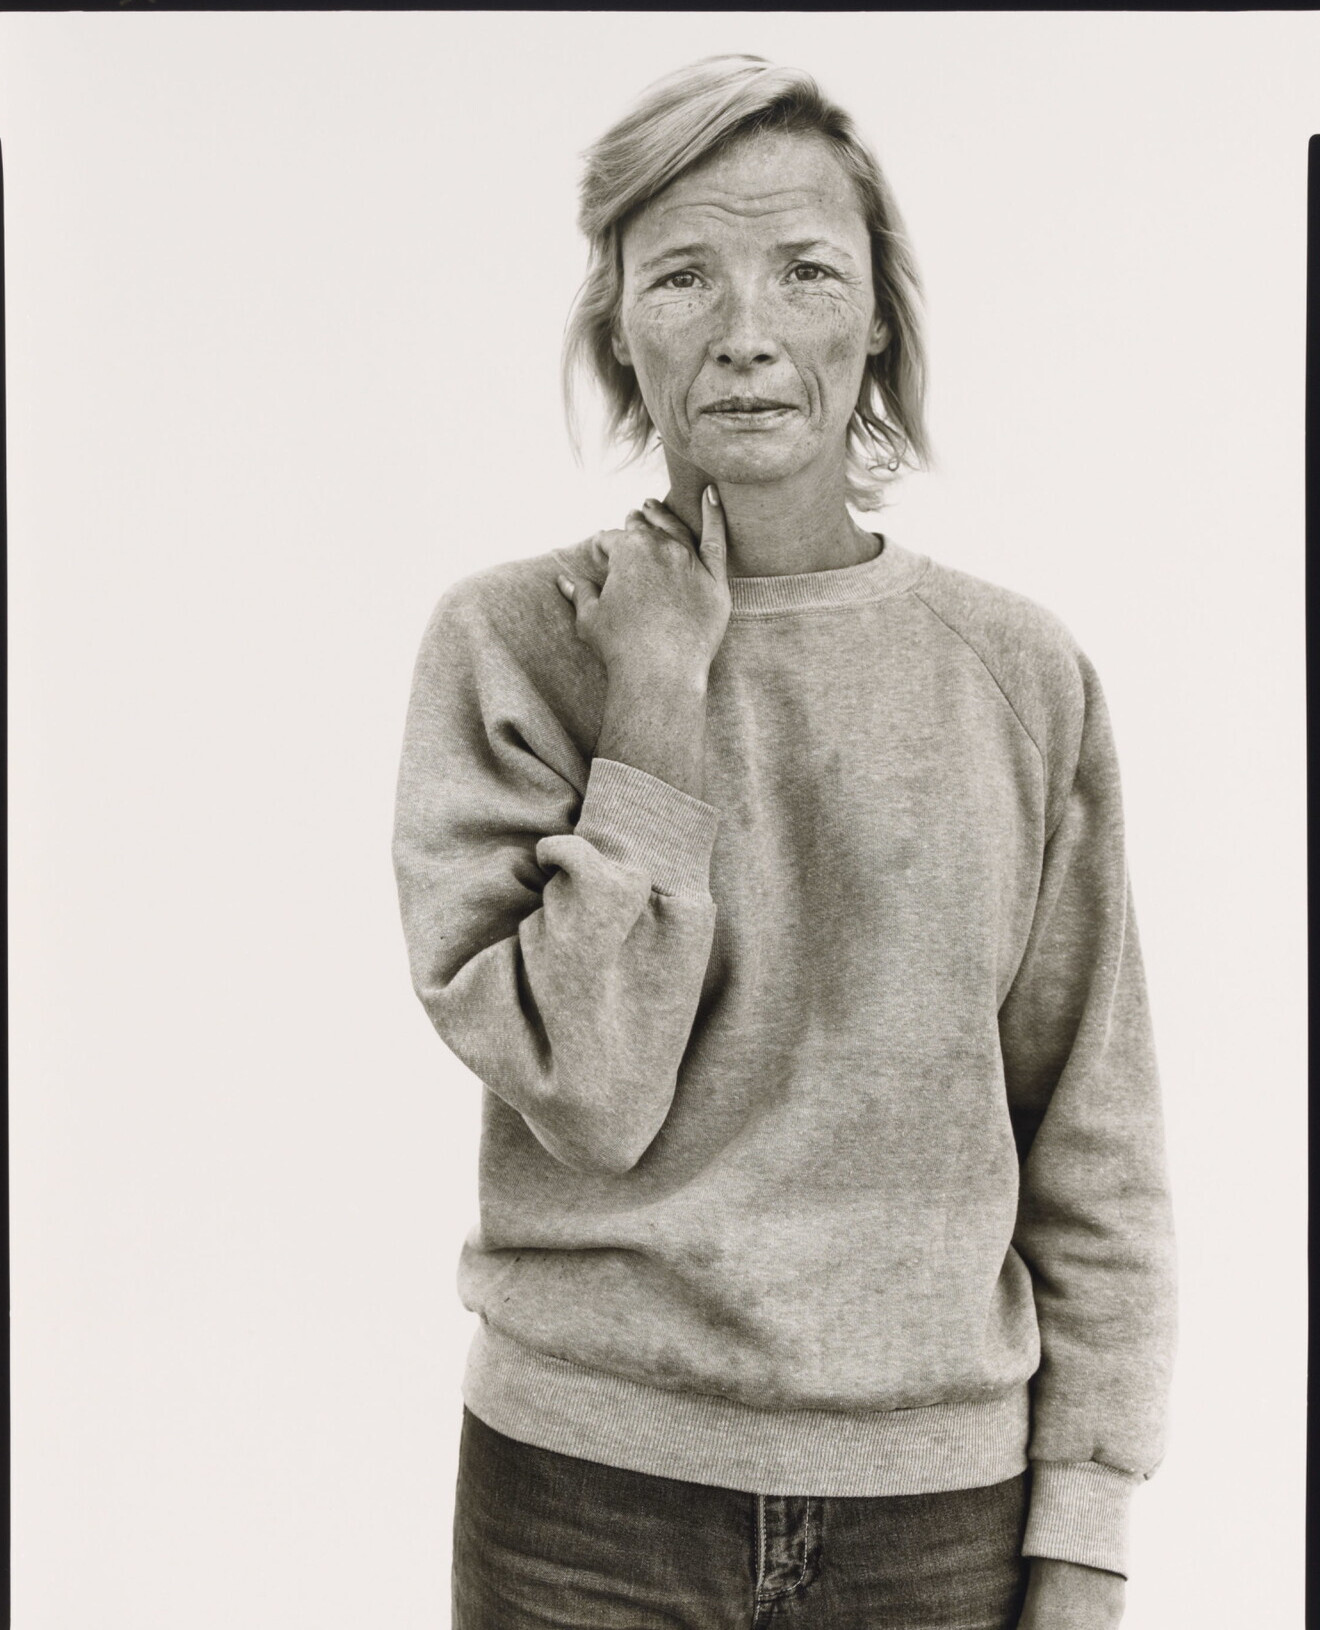 Руби Холден, ростовщик, Хендерсон, Невада, 1980. Фотограф Ричард Аведон